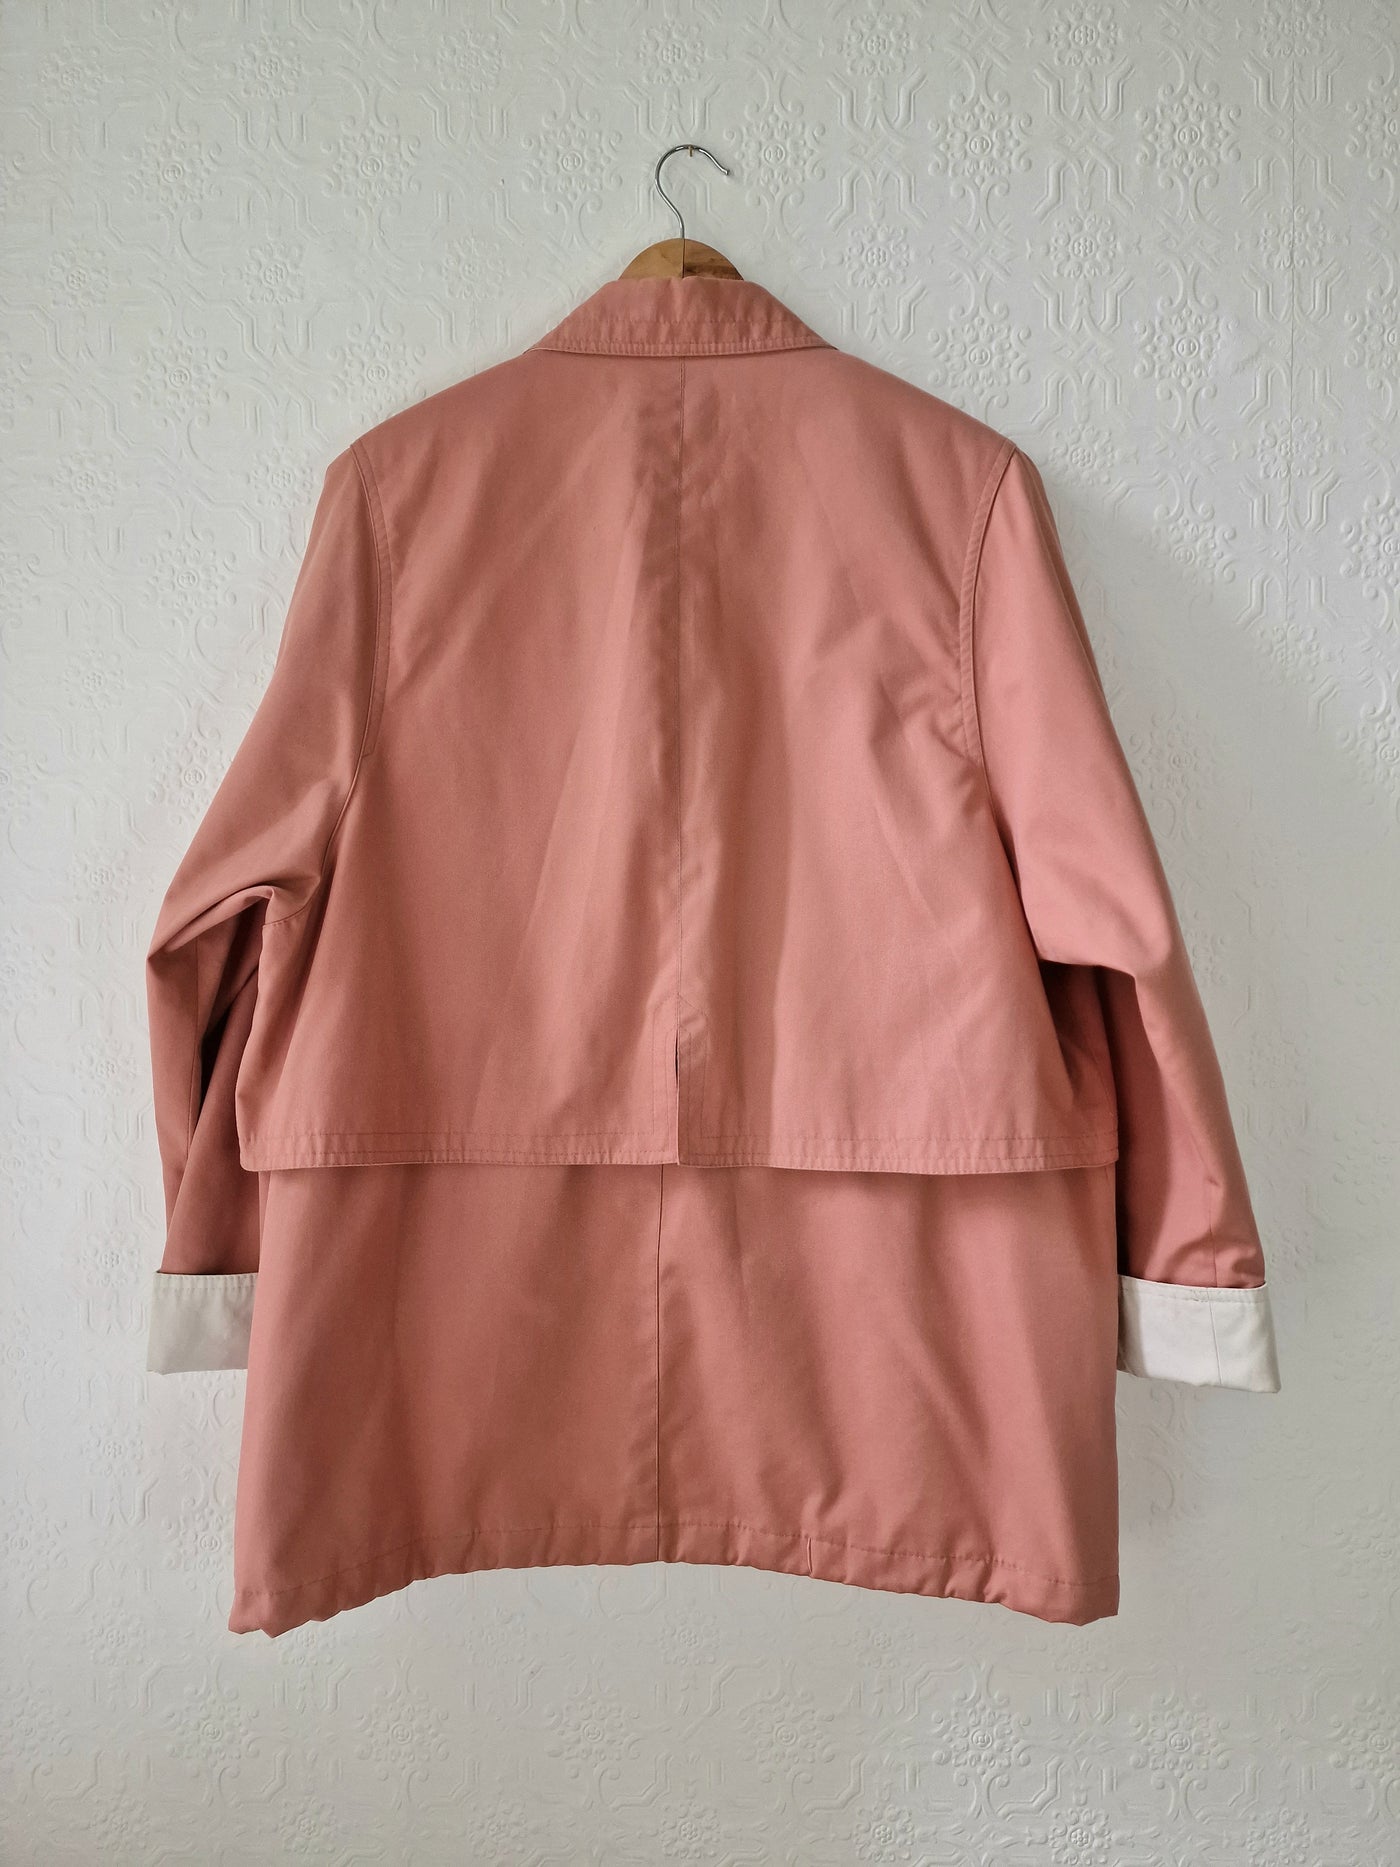 Vintage 80s Dusty Pink Lightweight Parka Style Jacket - M